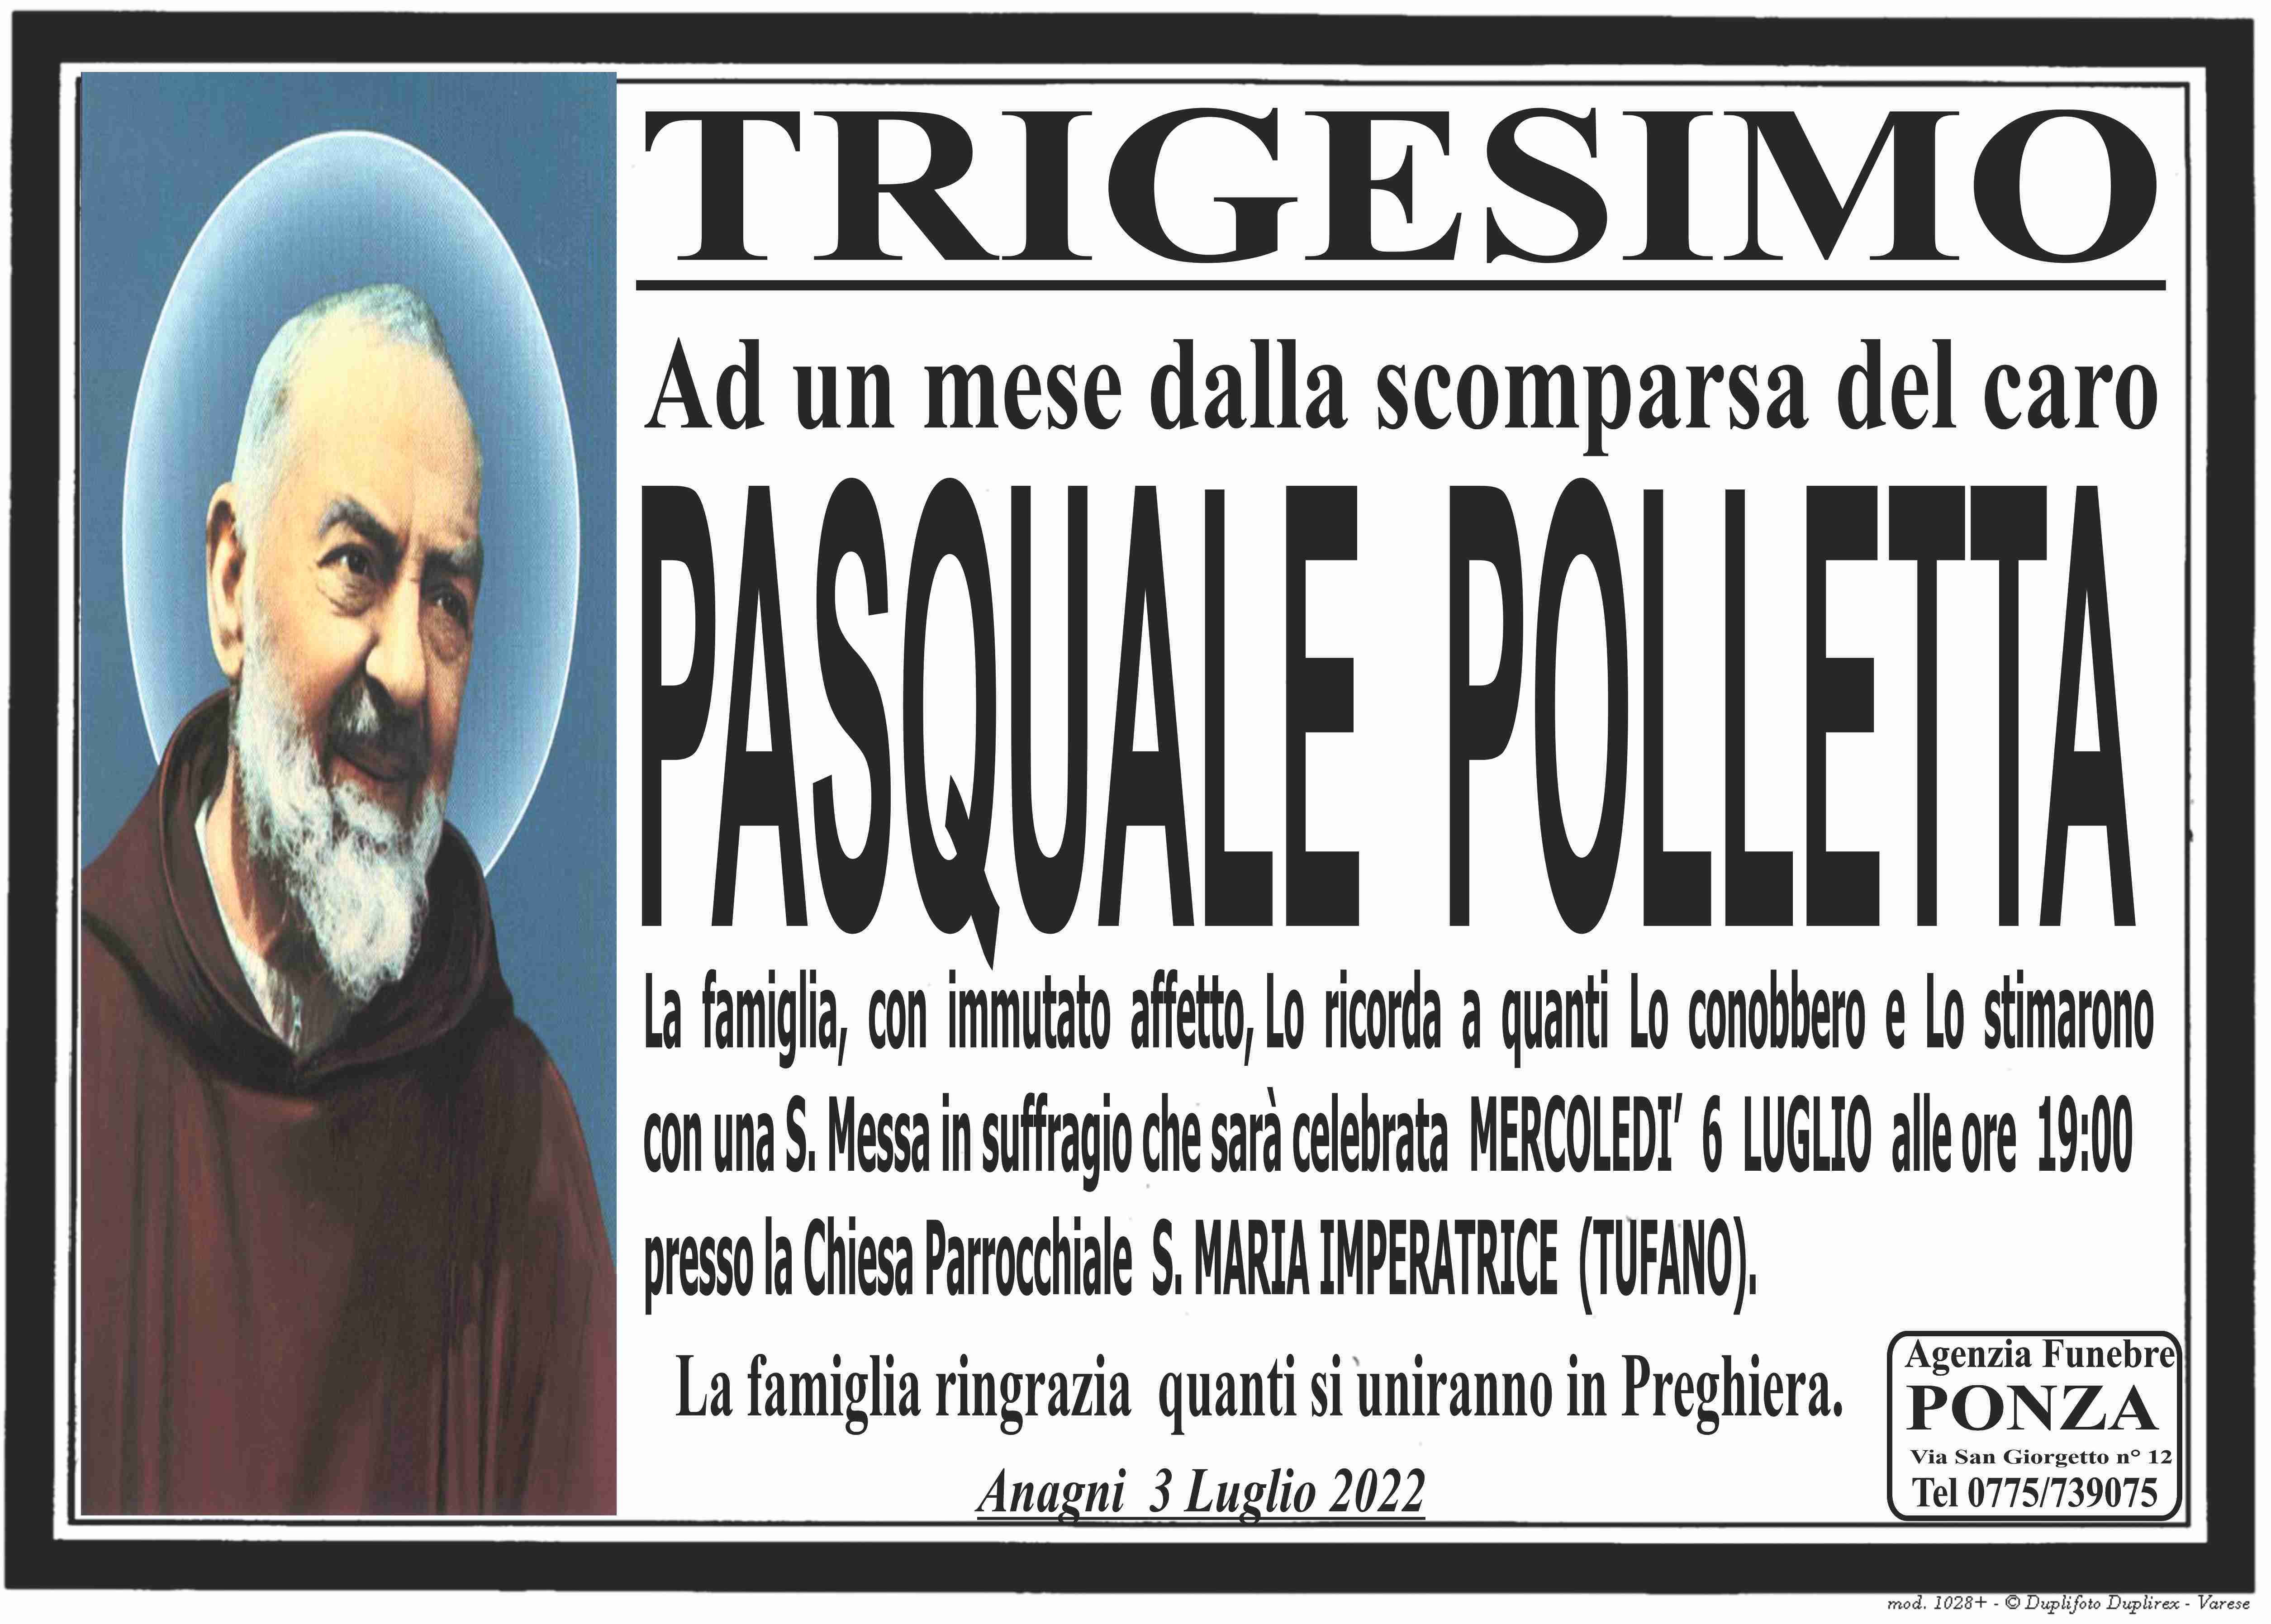 Pasquale Polletta